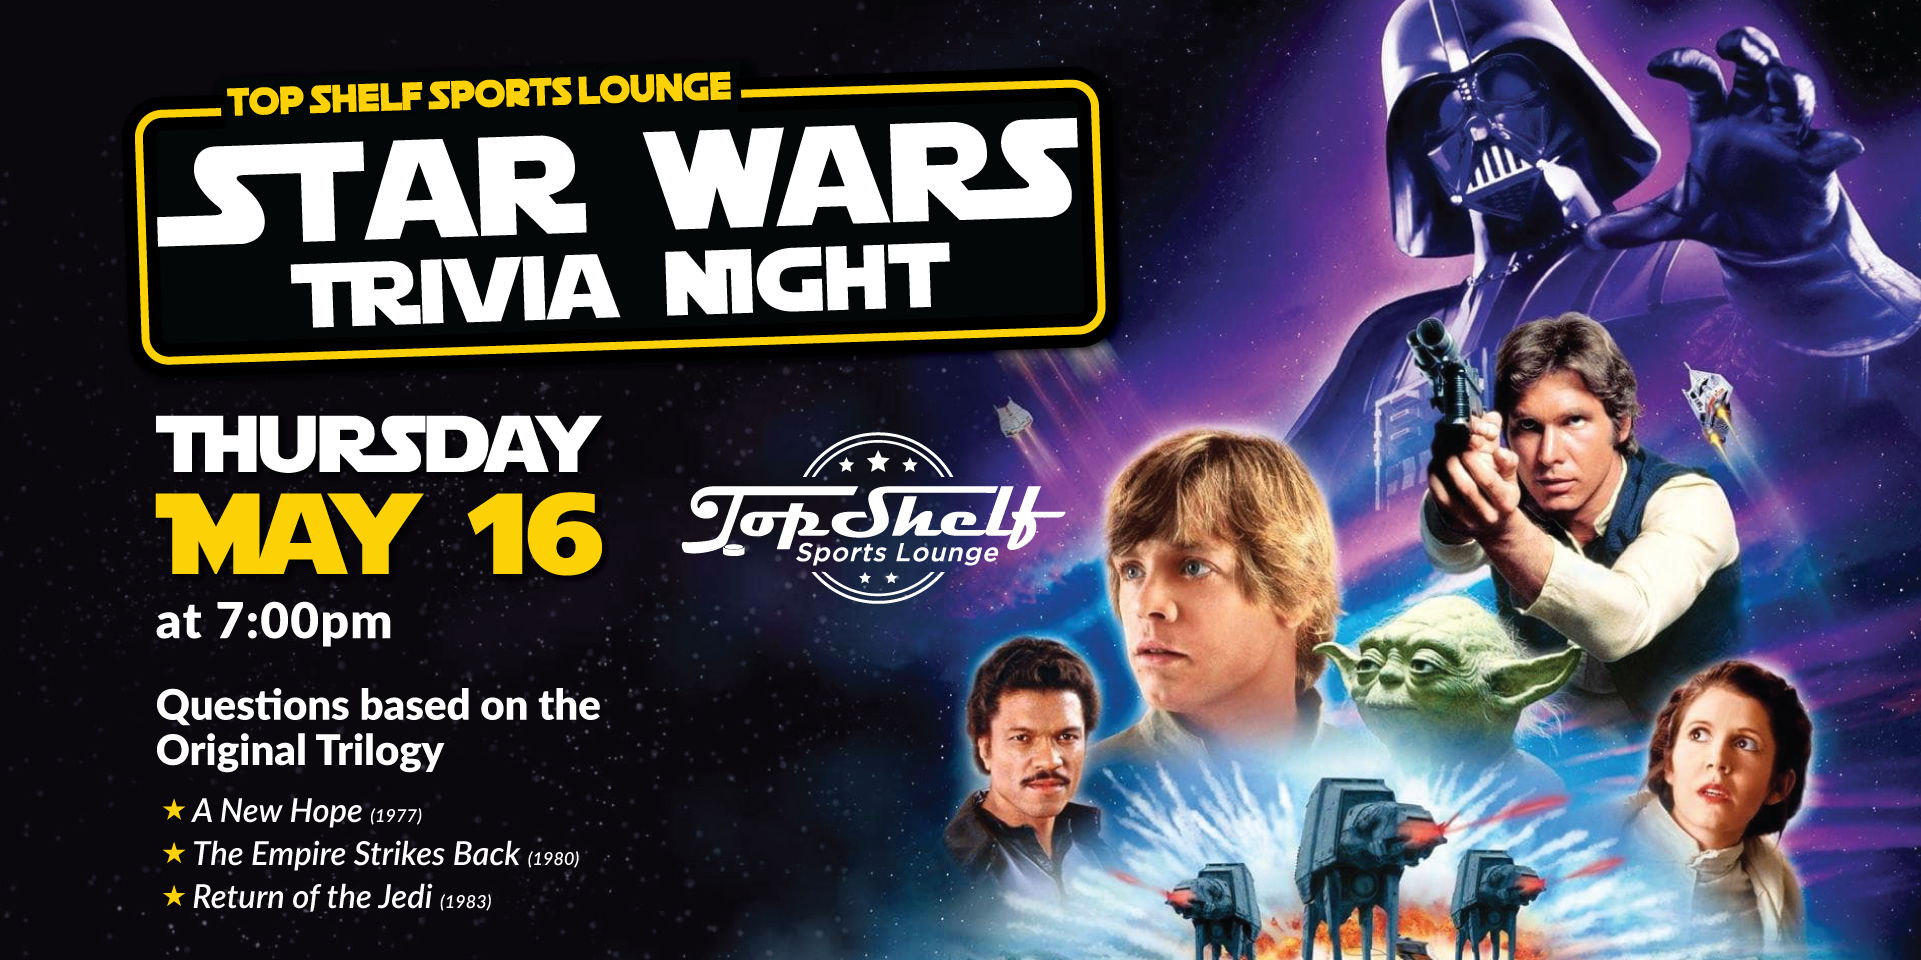 Star Wars Trivia Night promotional image